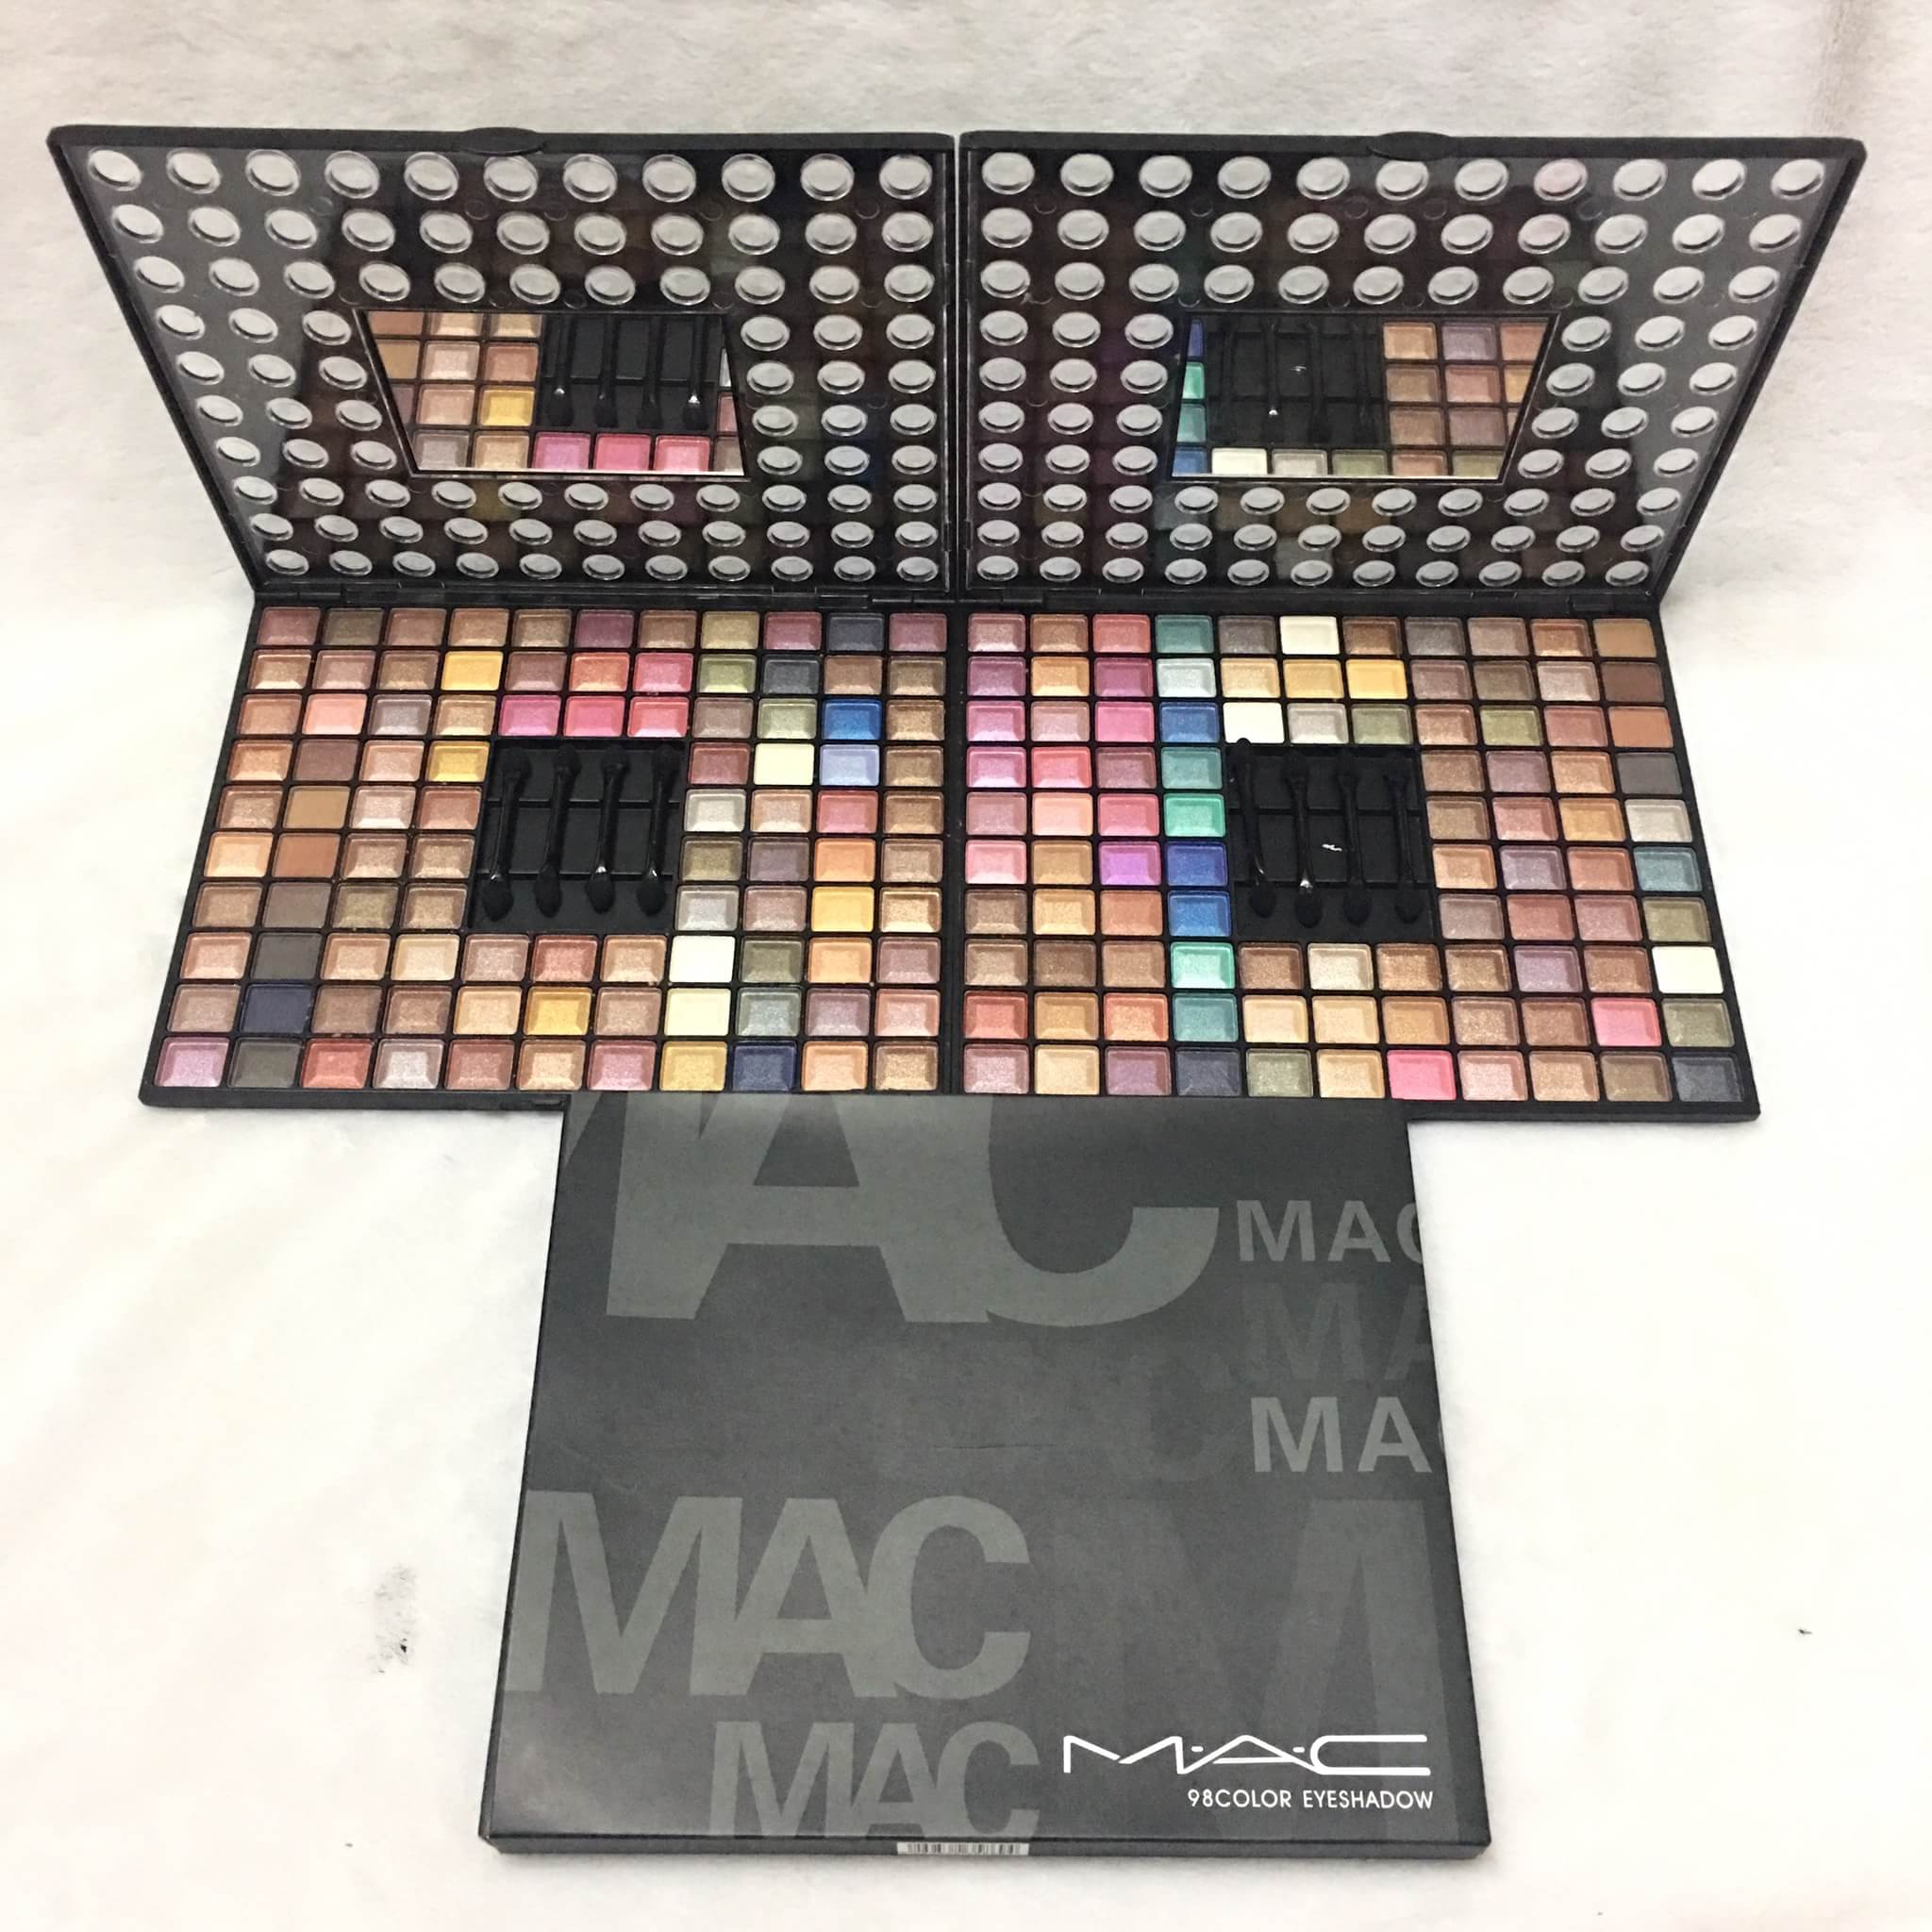 M.A.C. 98 color eyeshadow 0